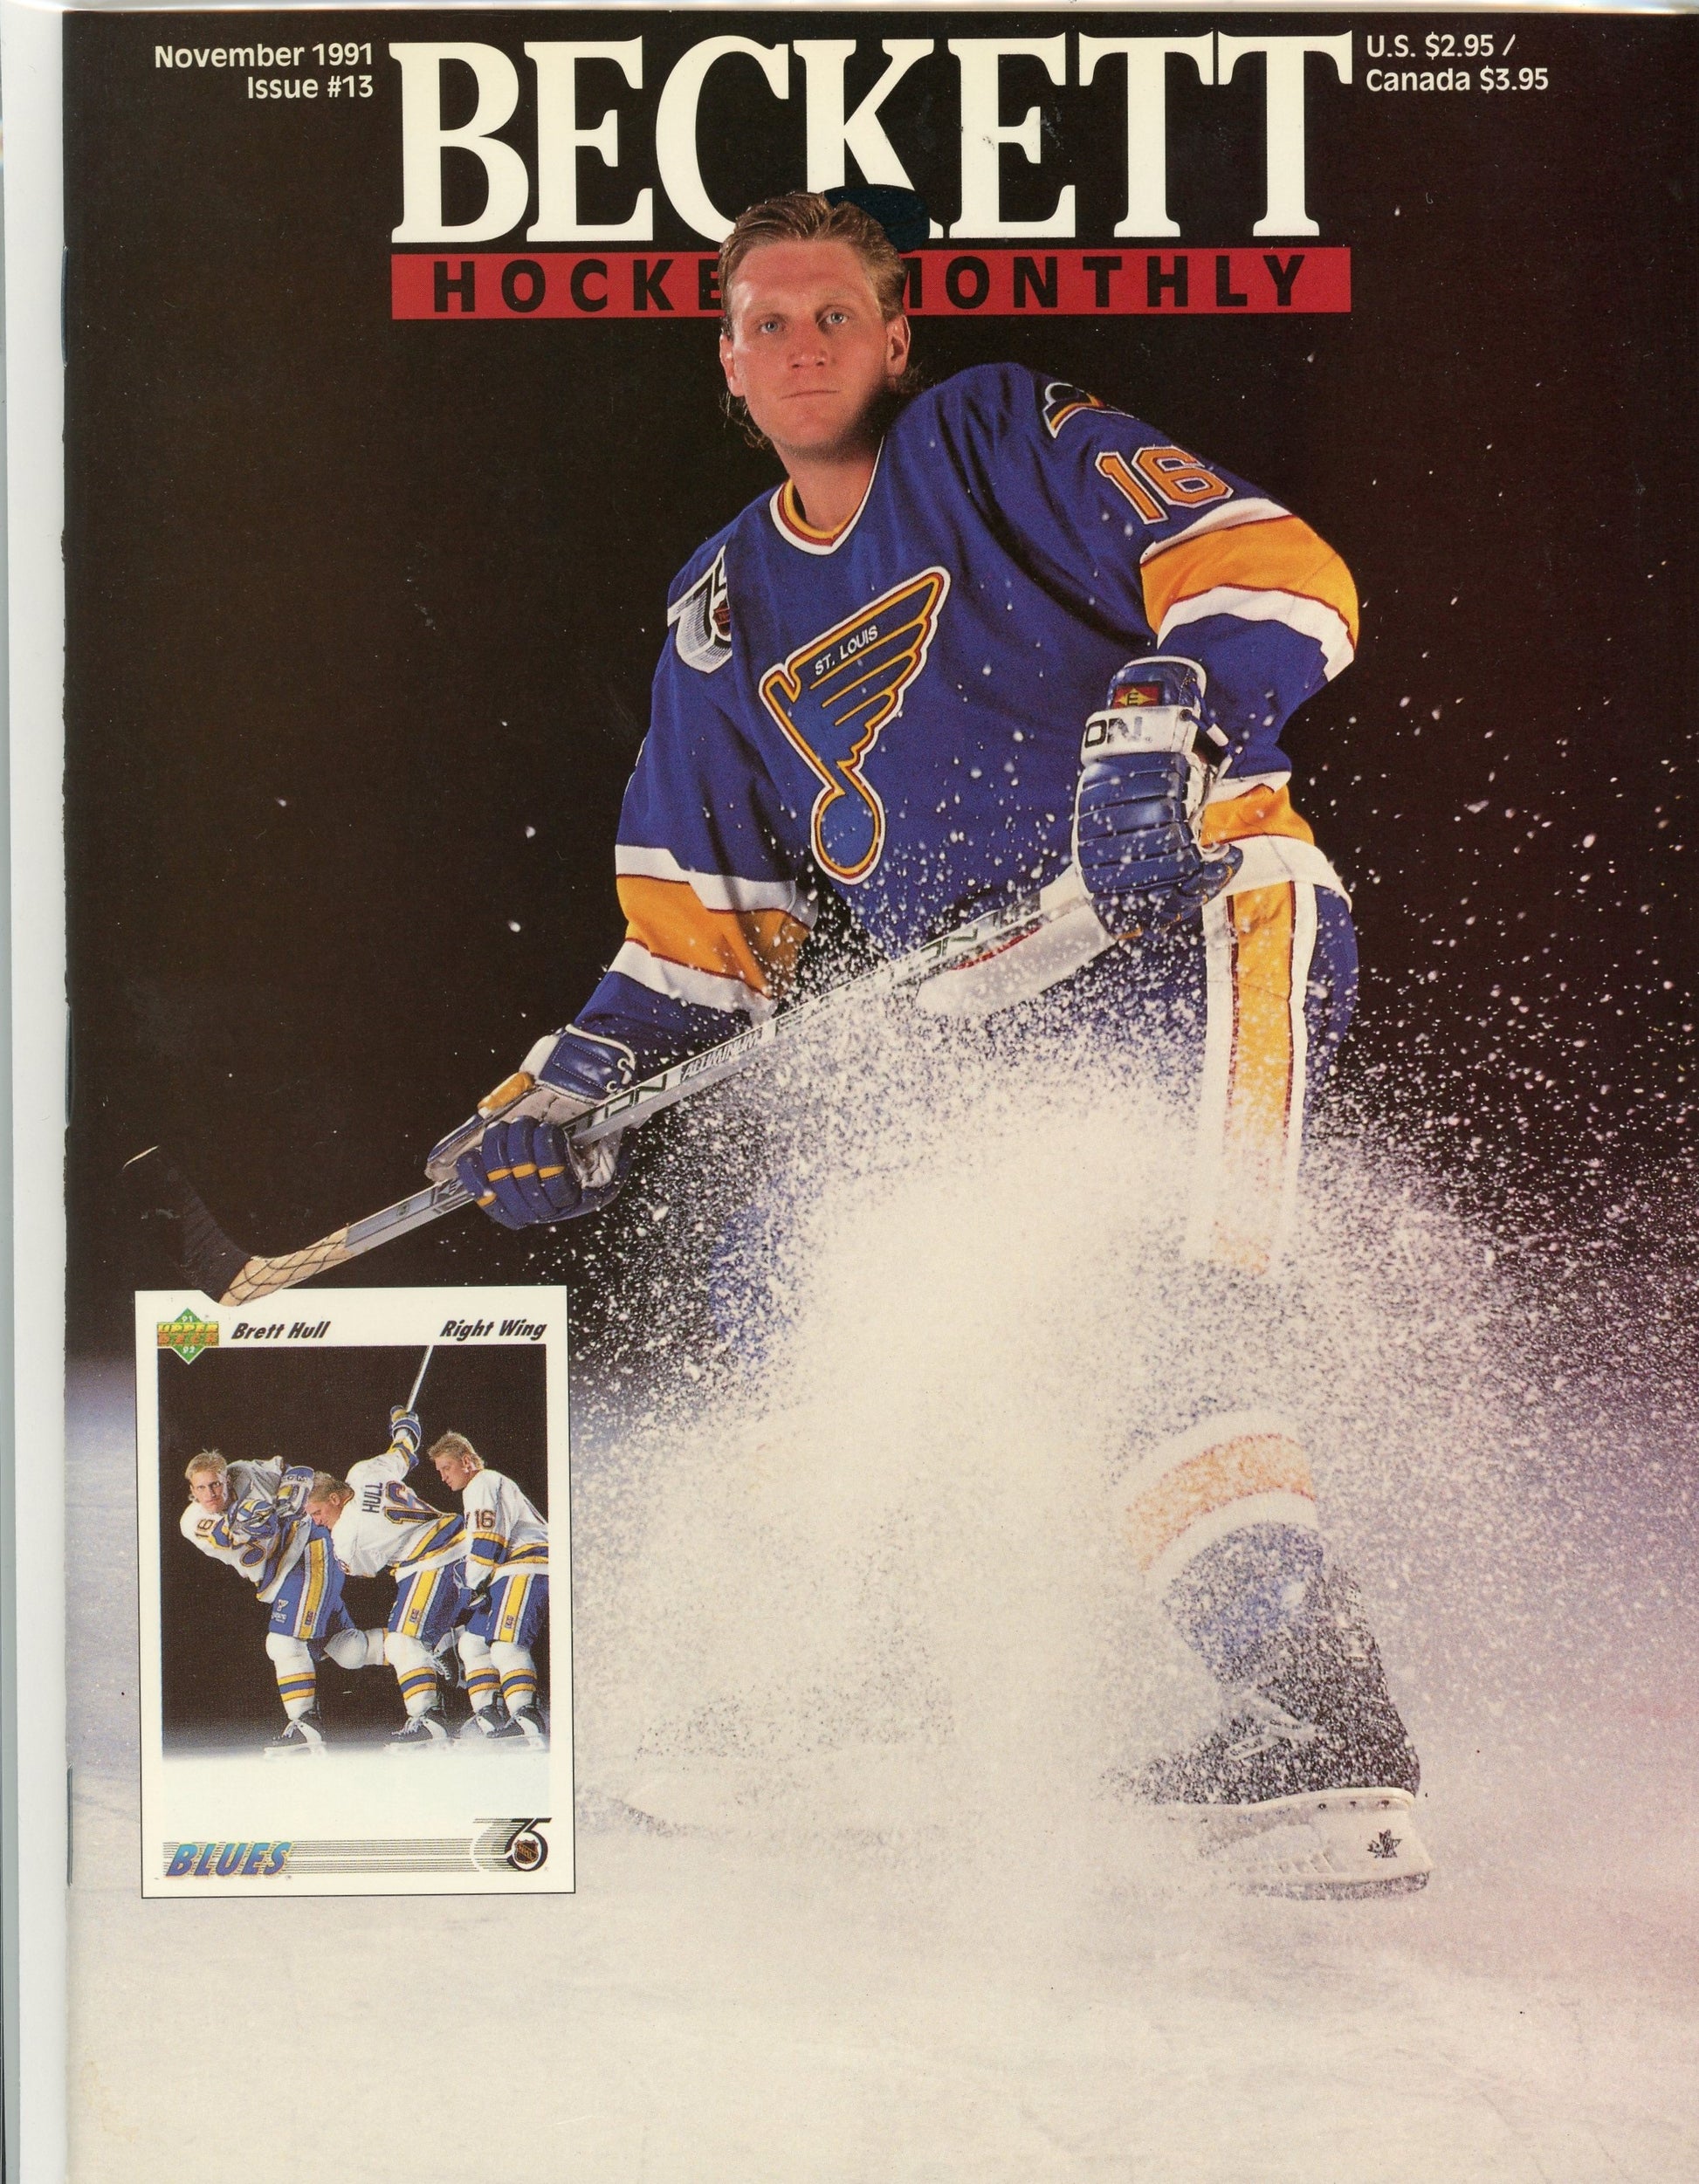 Hockey - Brett Hull Master Set: simdem's Hullie Master Set Set Image Gallery